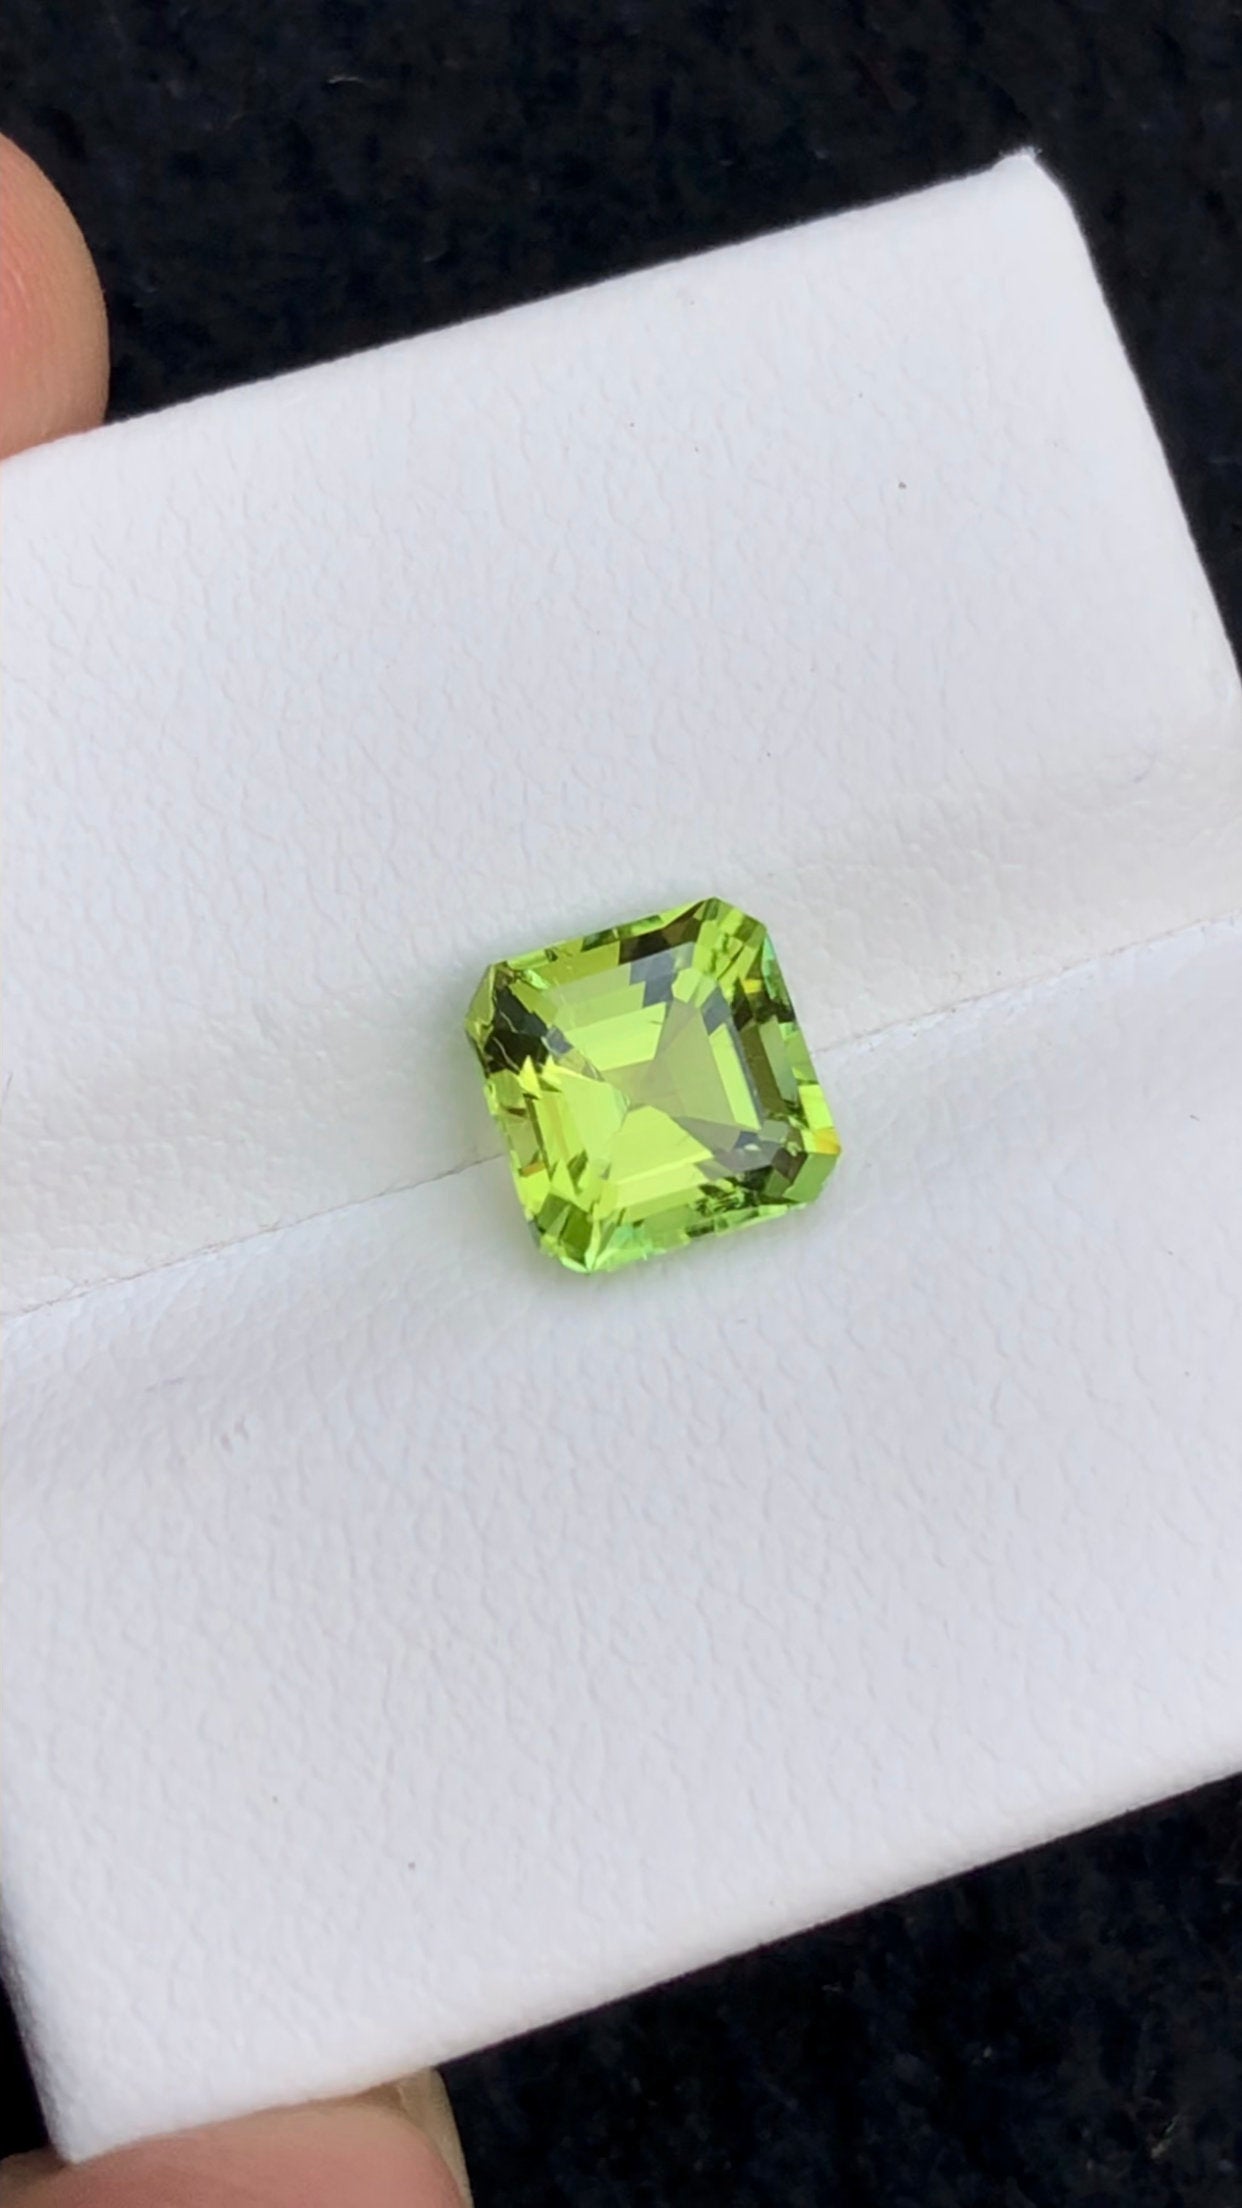 1.50 carat faceted mid green tourmaline origin Afghanistan 100% natural